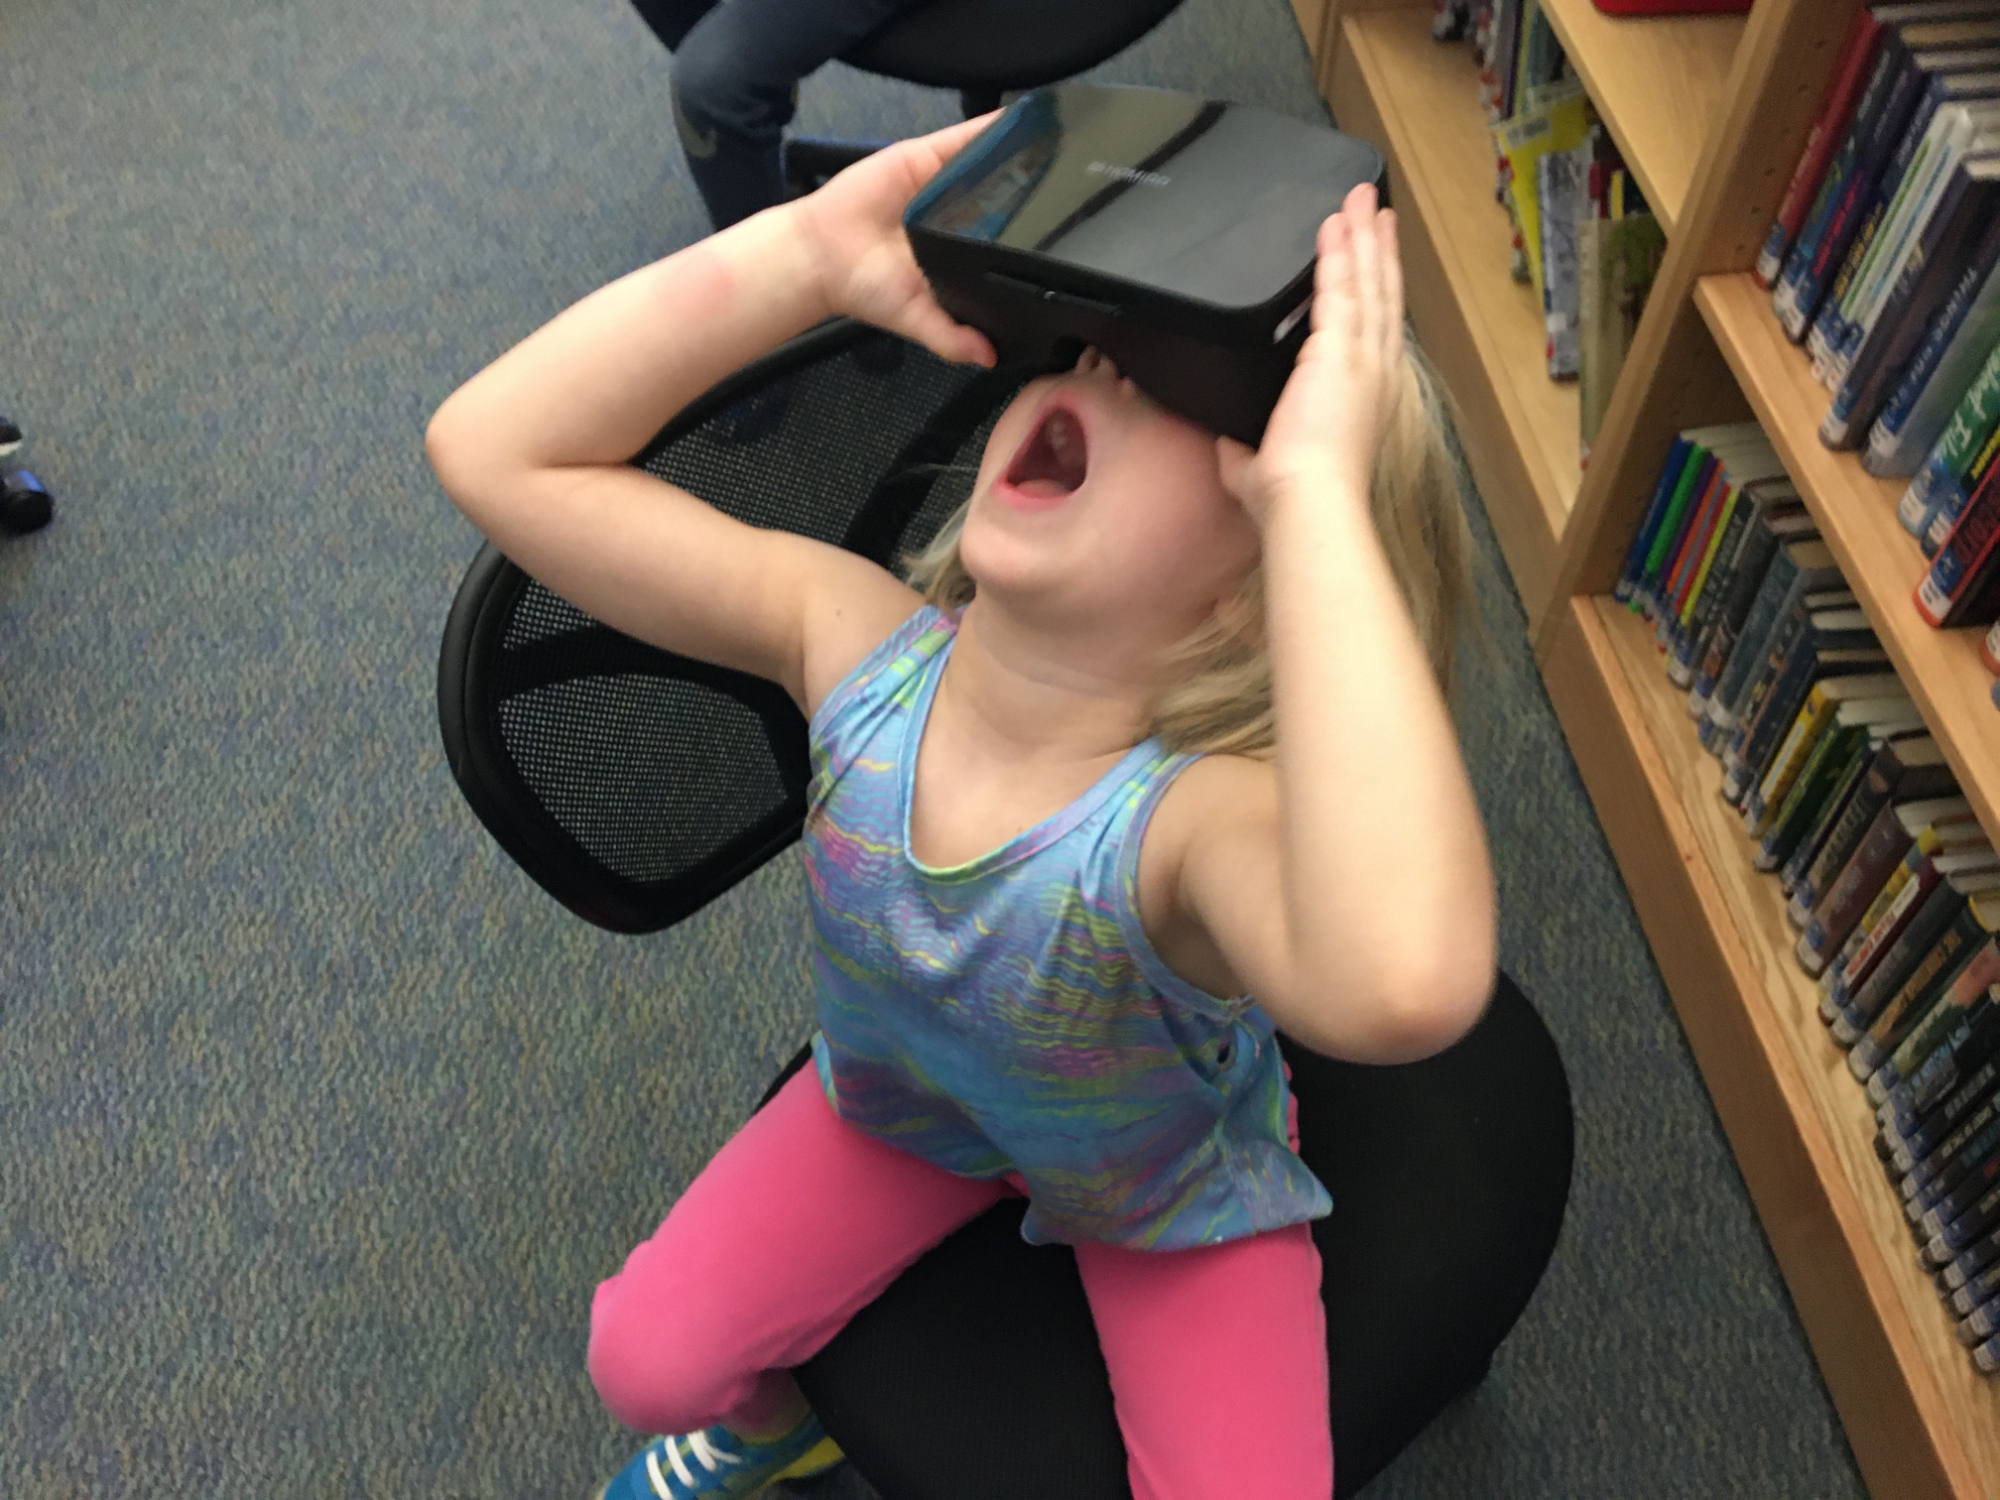 Students explore space through Virtual Reality